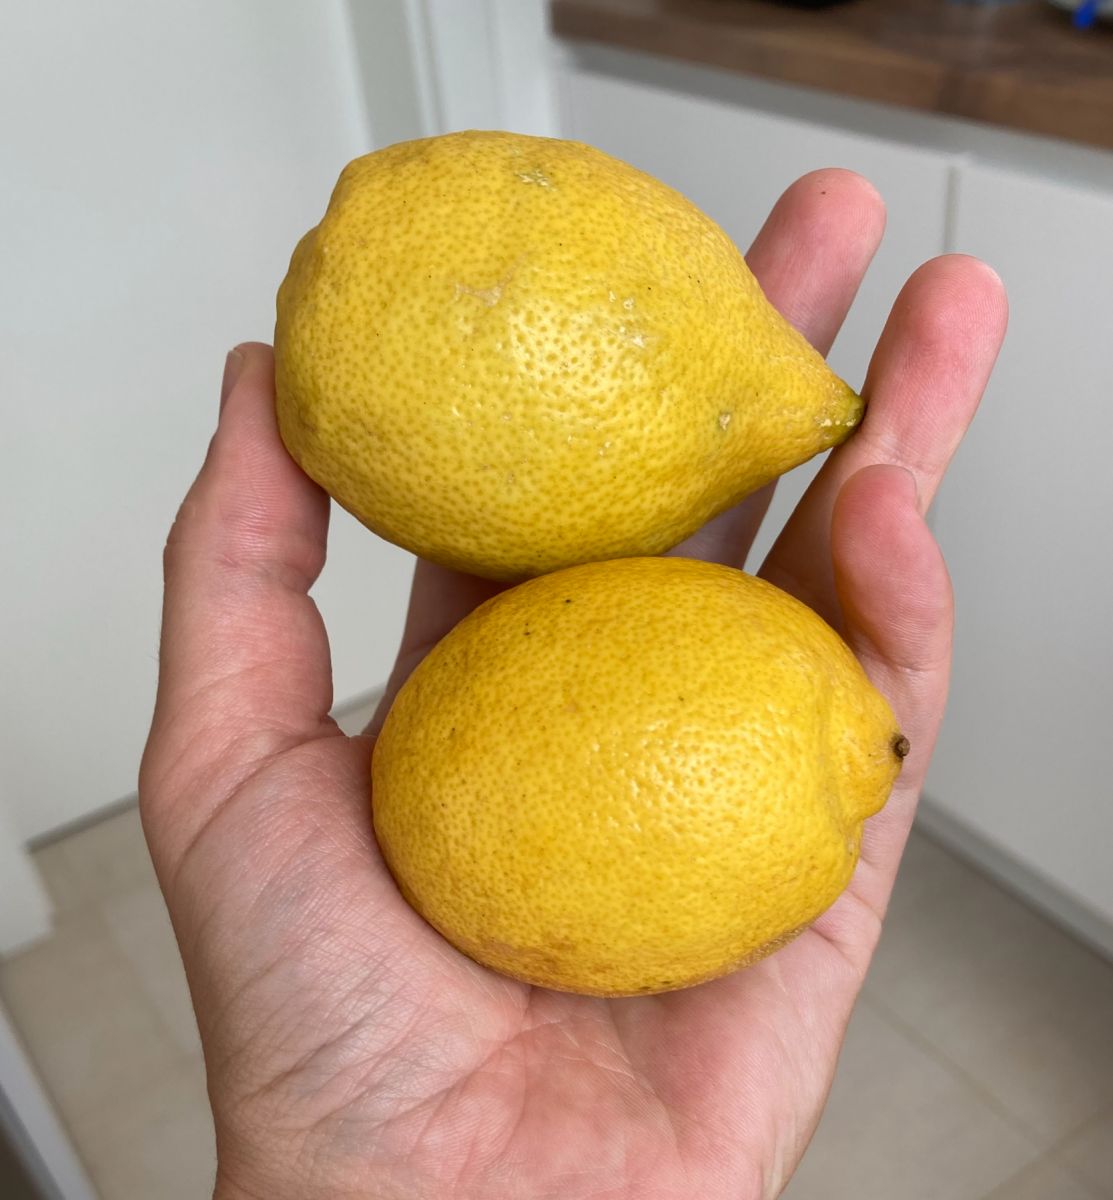 лимони